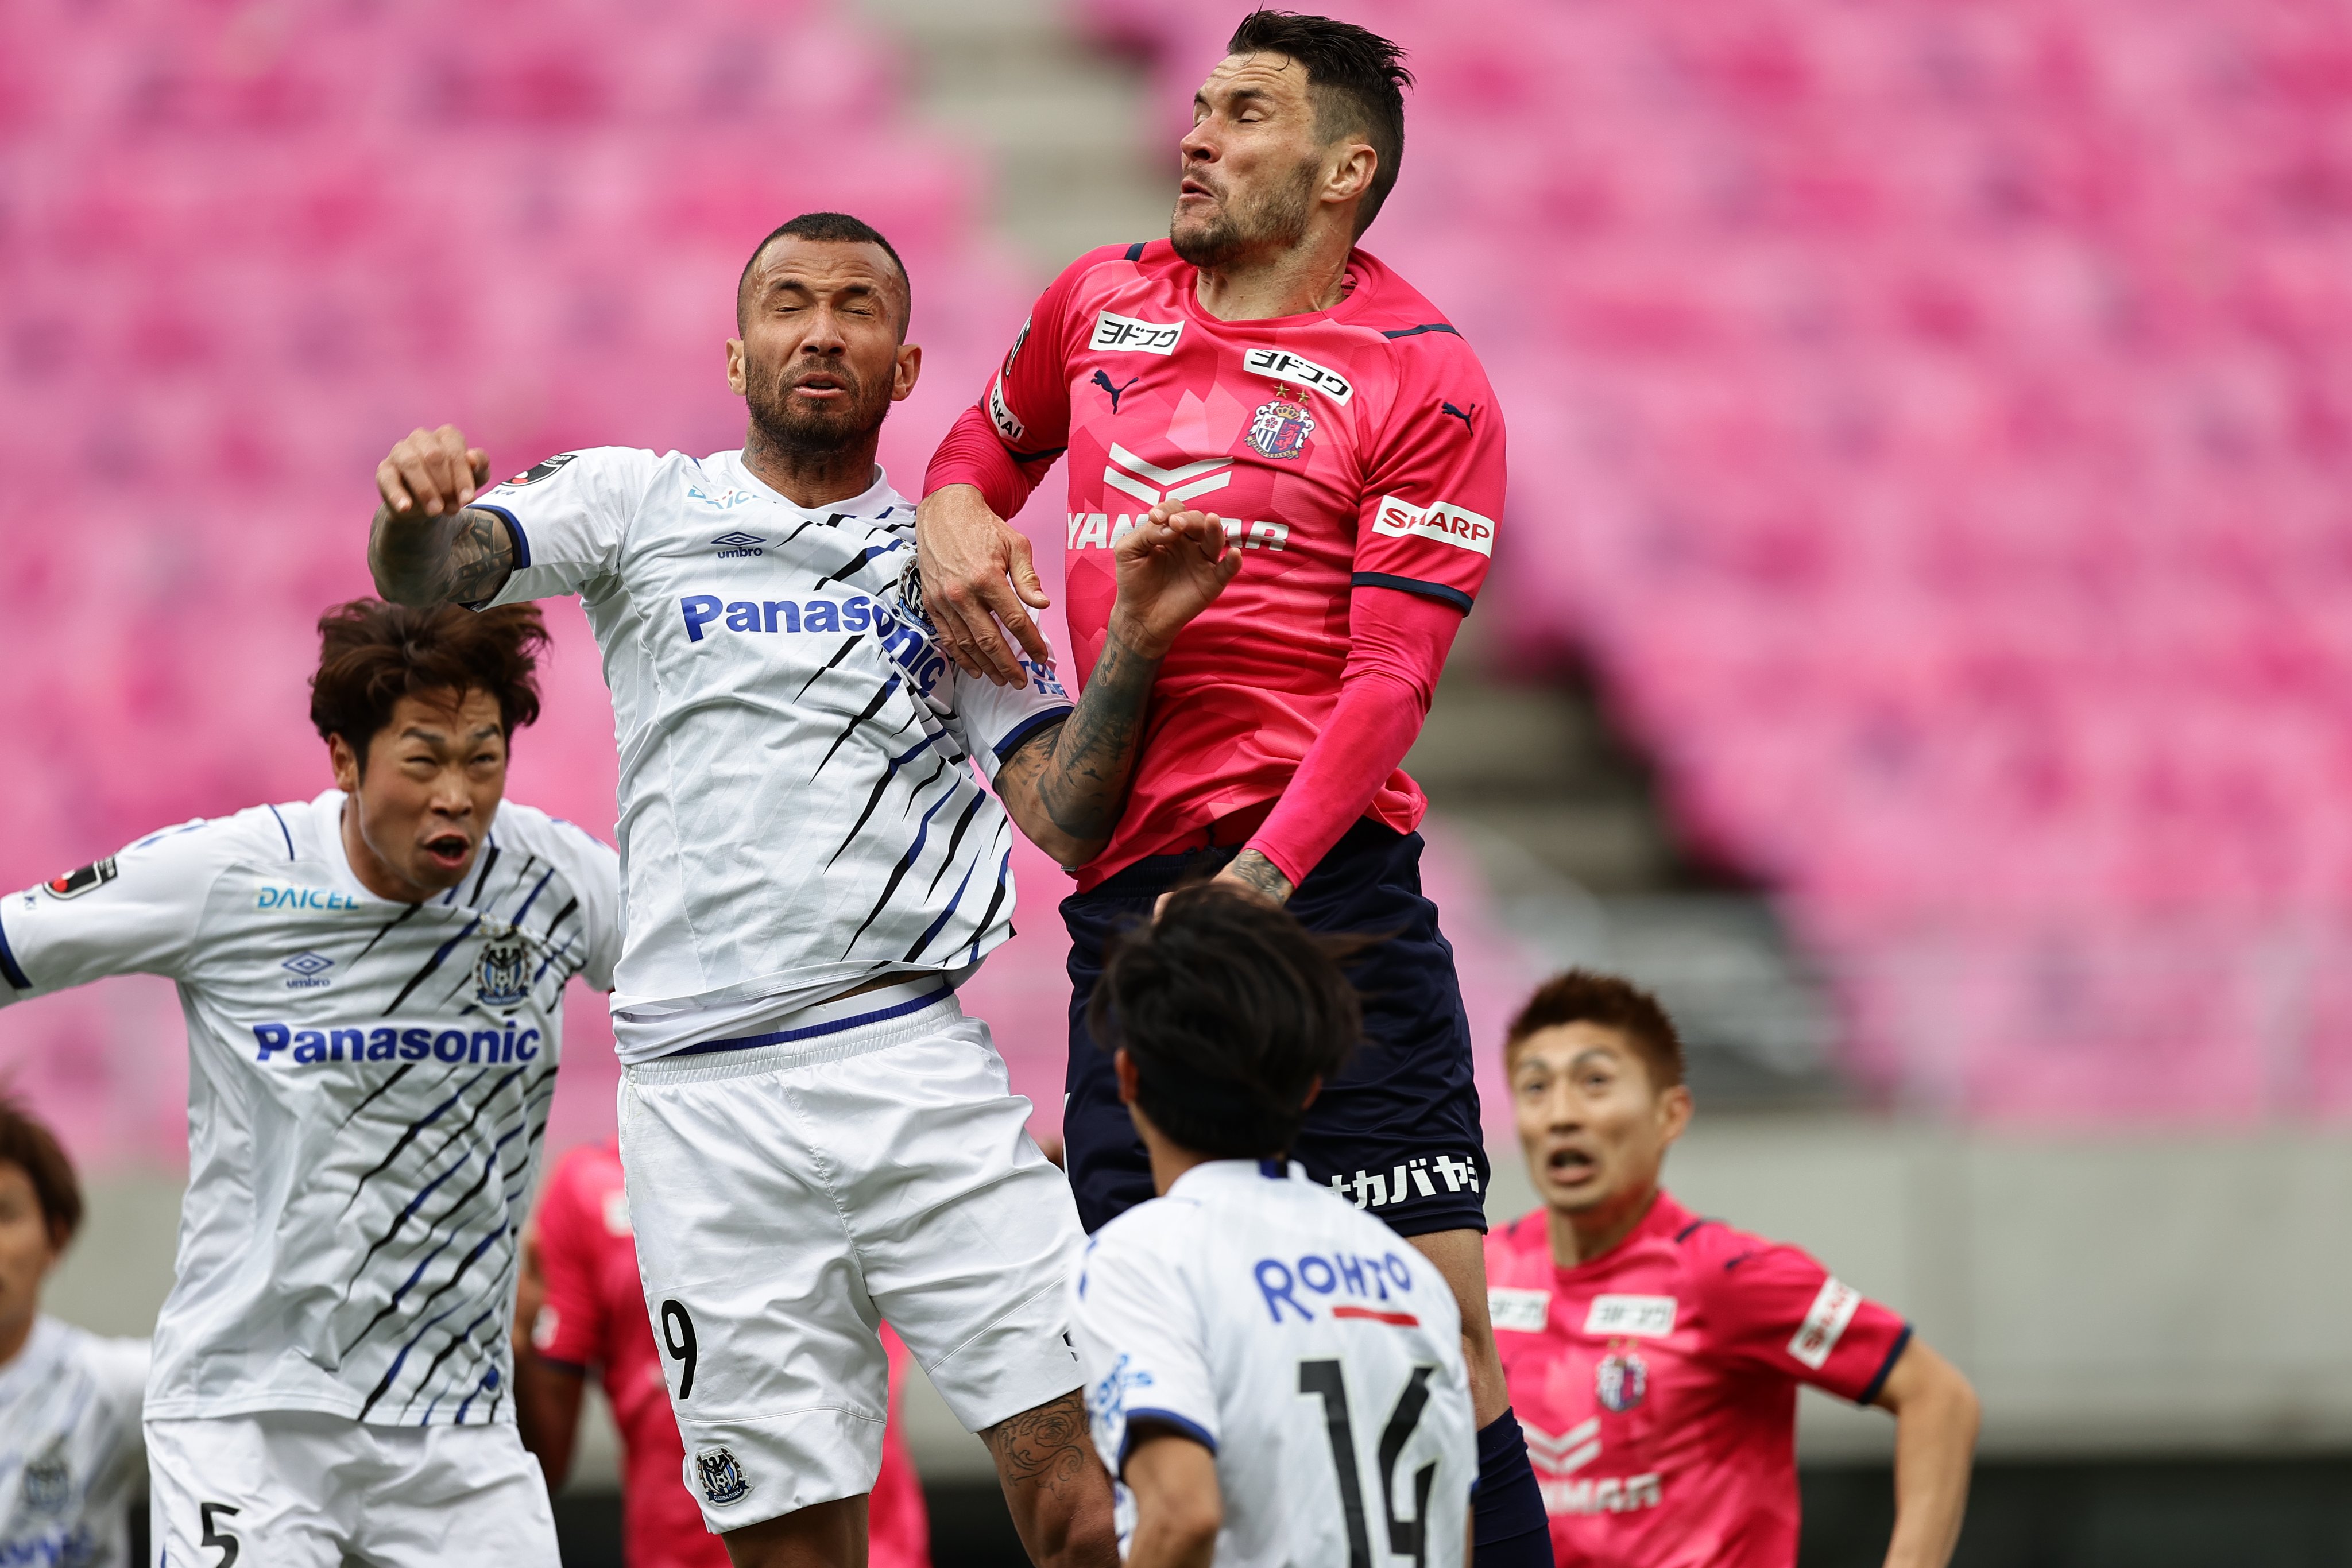 Hasil, Klasemen, dan Highlight J1 League Pekan Ke-12: Derbi Osaka dan Kembalinya Iniesta